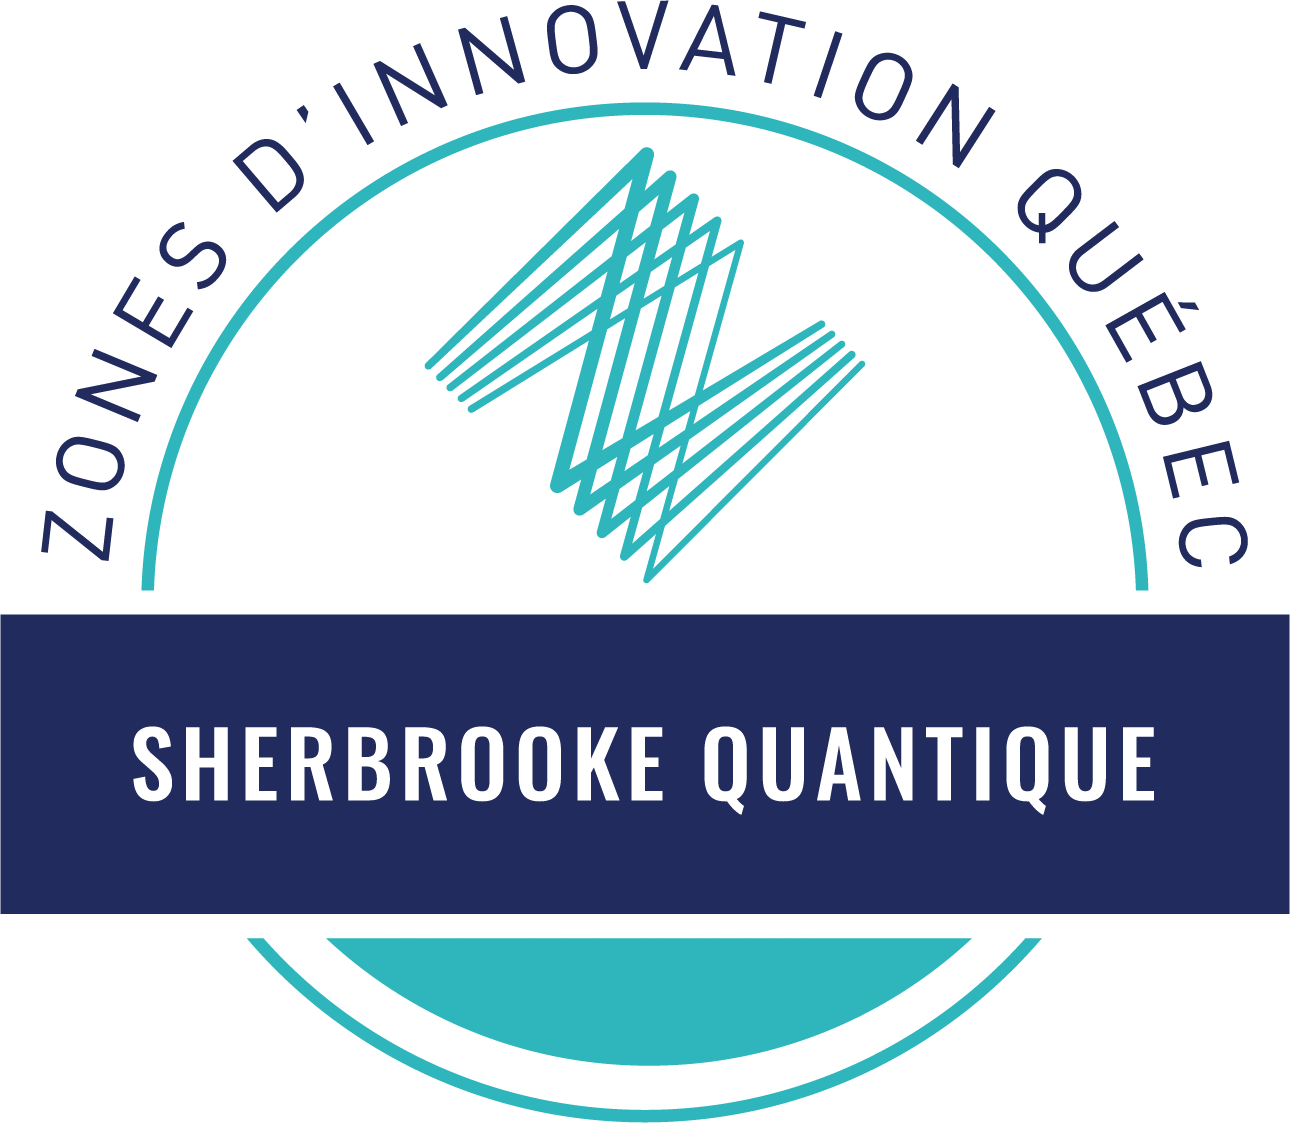 Zone d'innovation Sherbrooke quantique